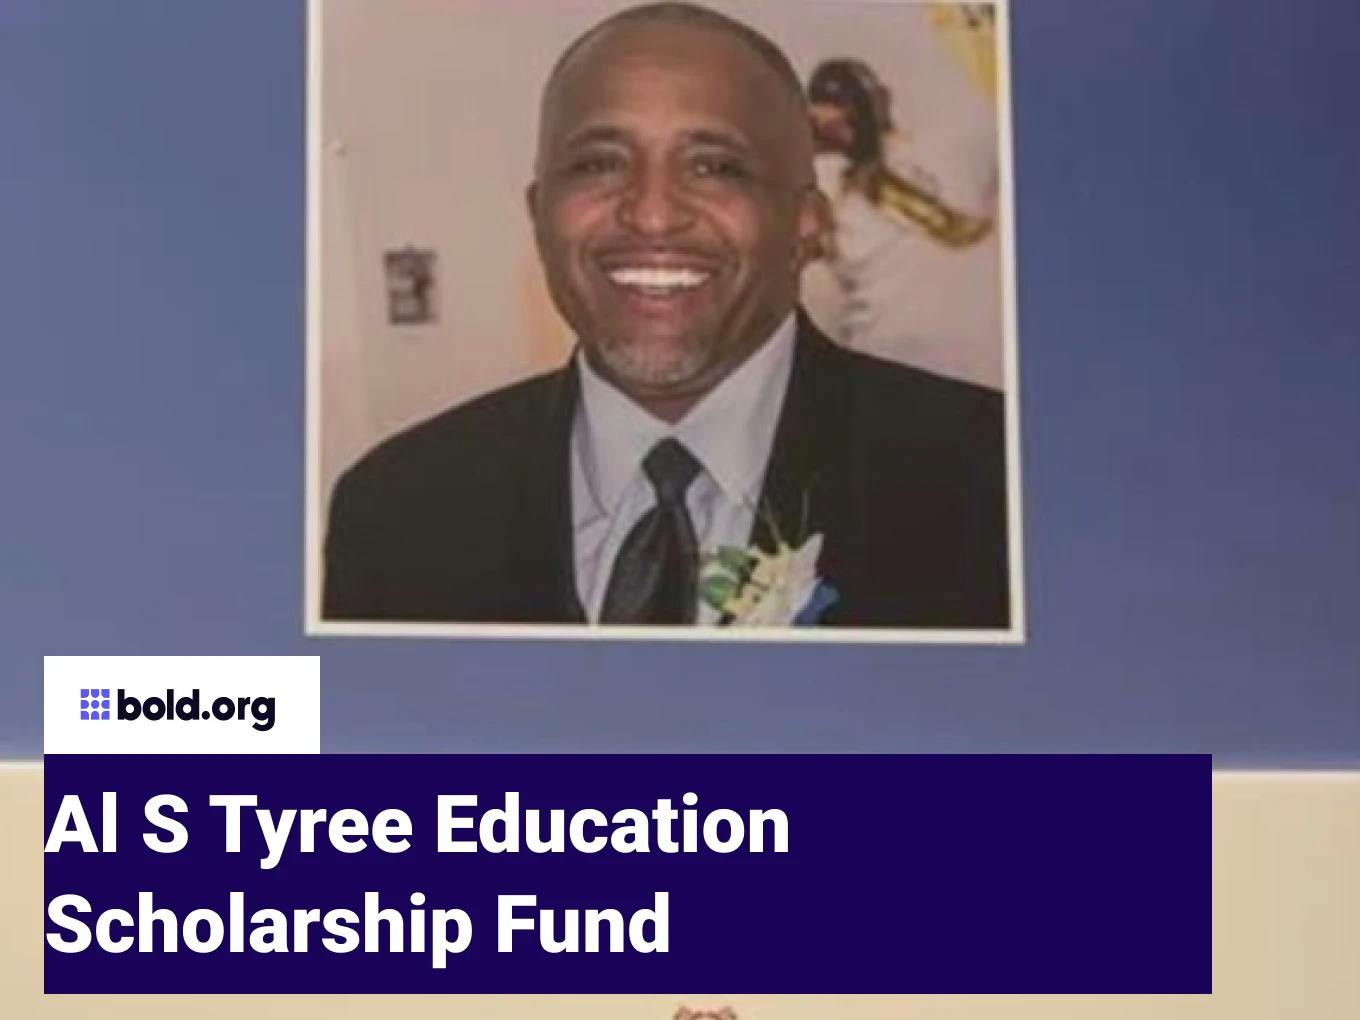 Al S Tyree Education Scholarship Fund